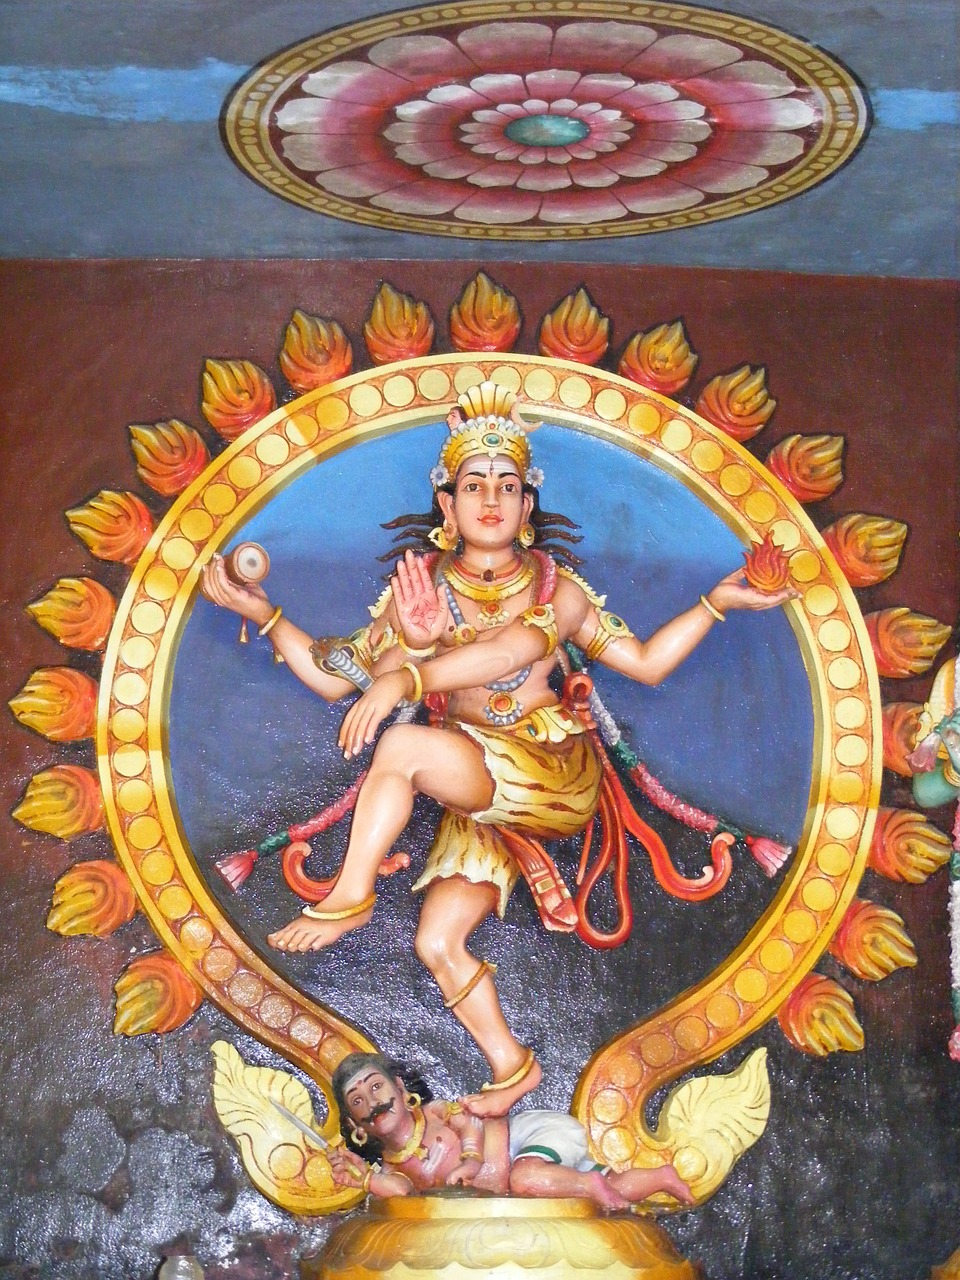 shiva hindu gods and goddesses